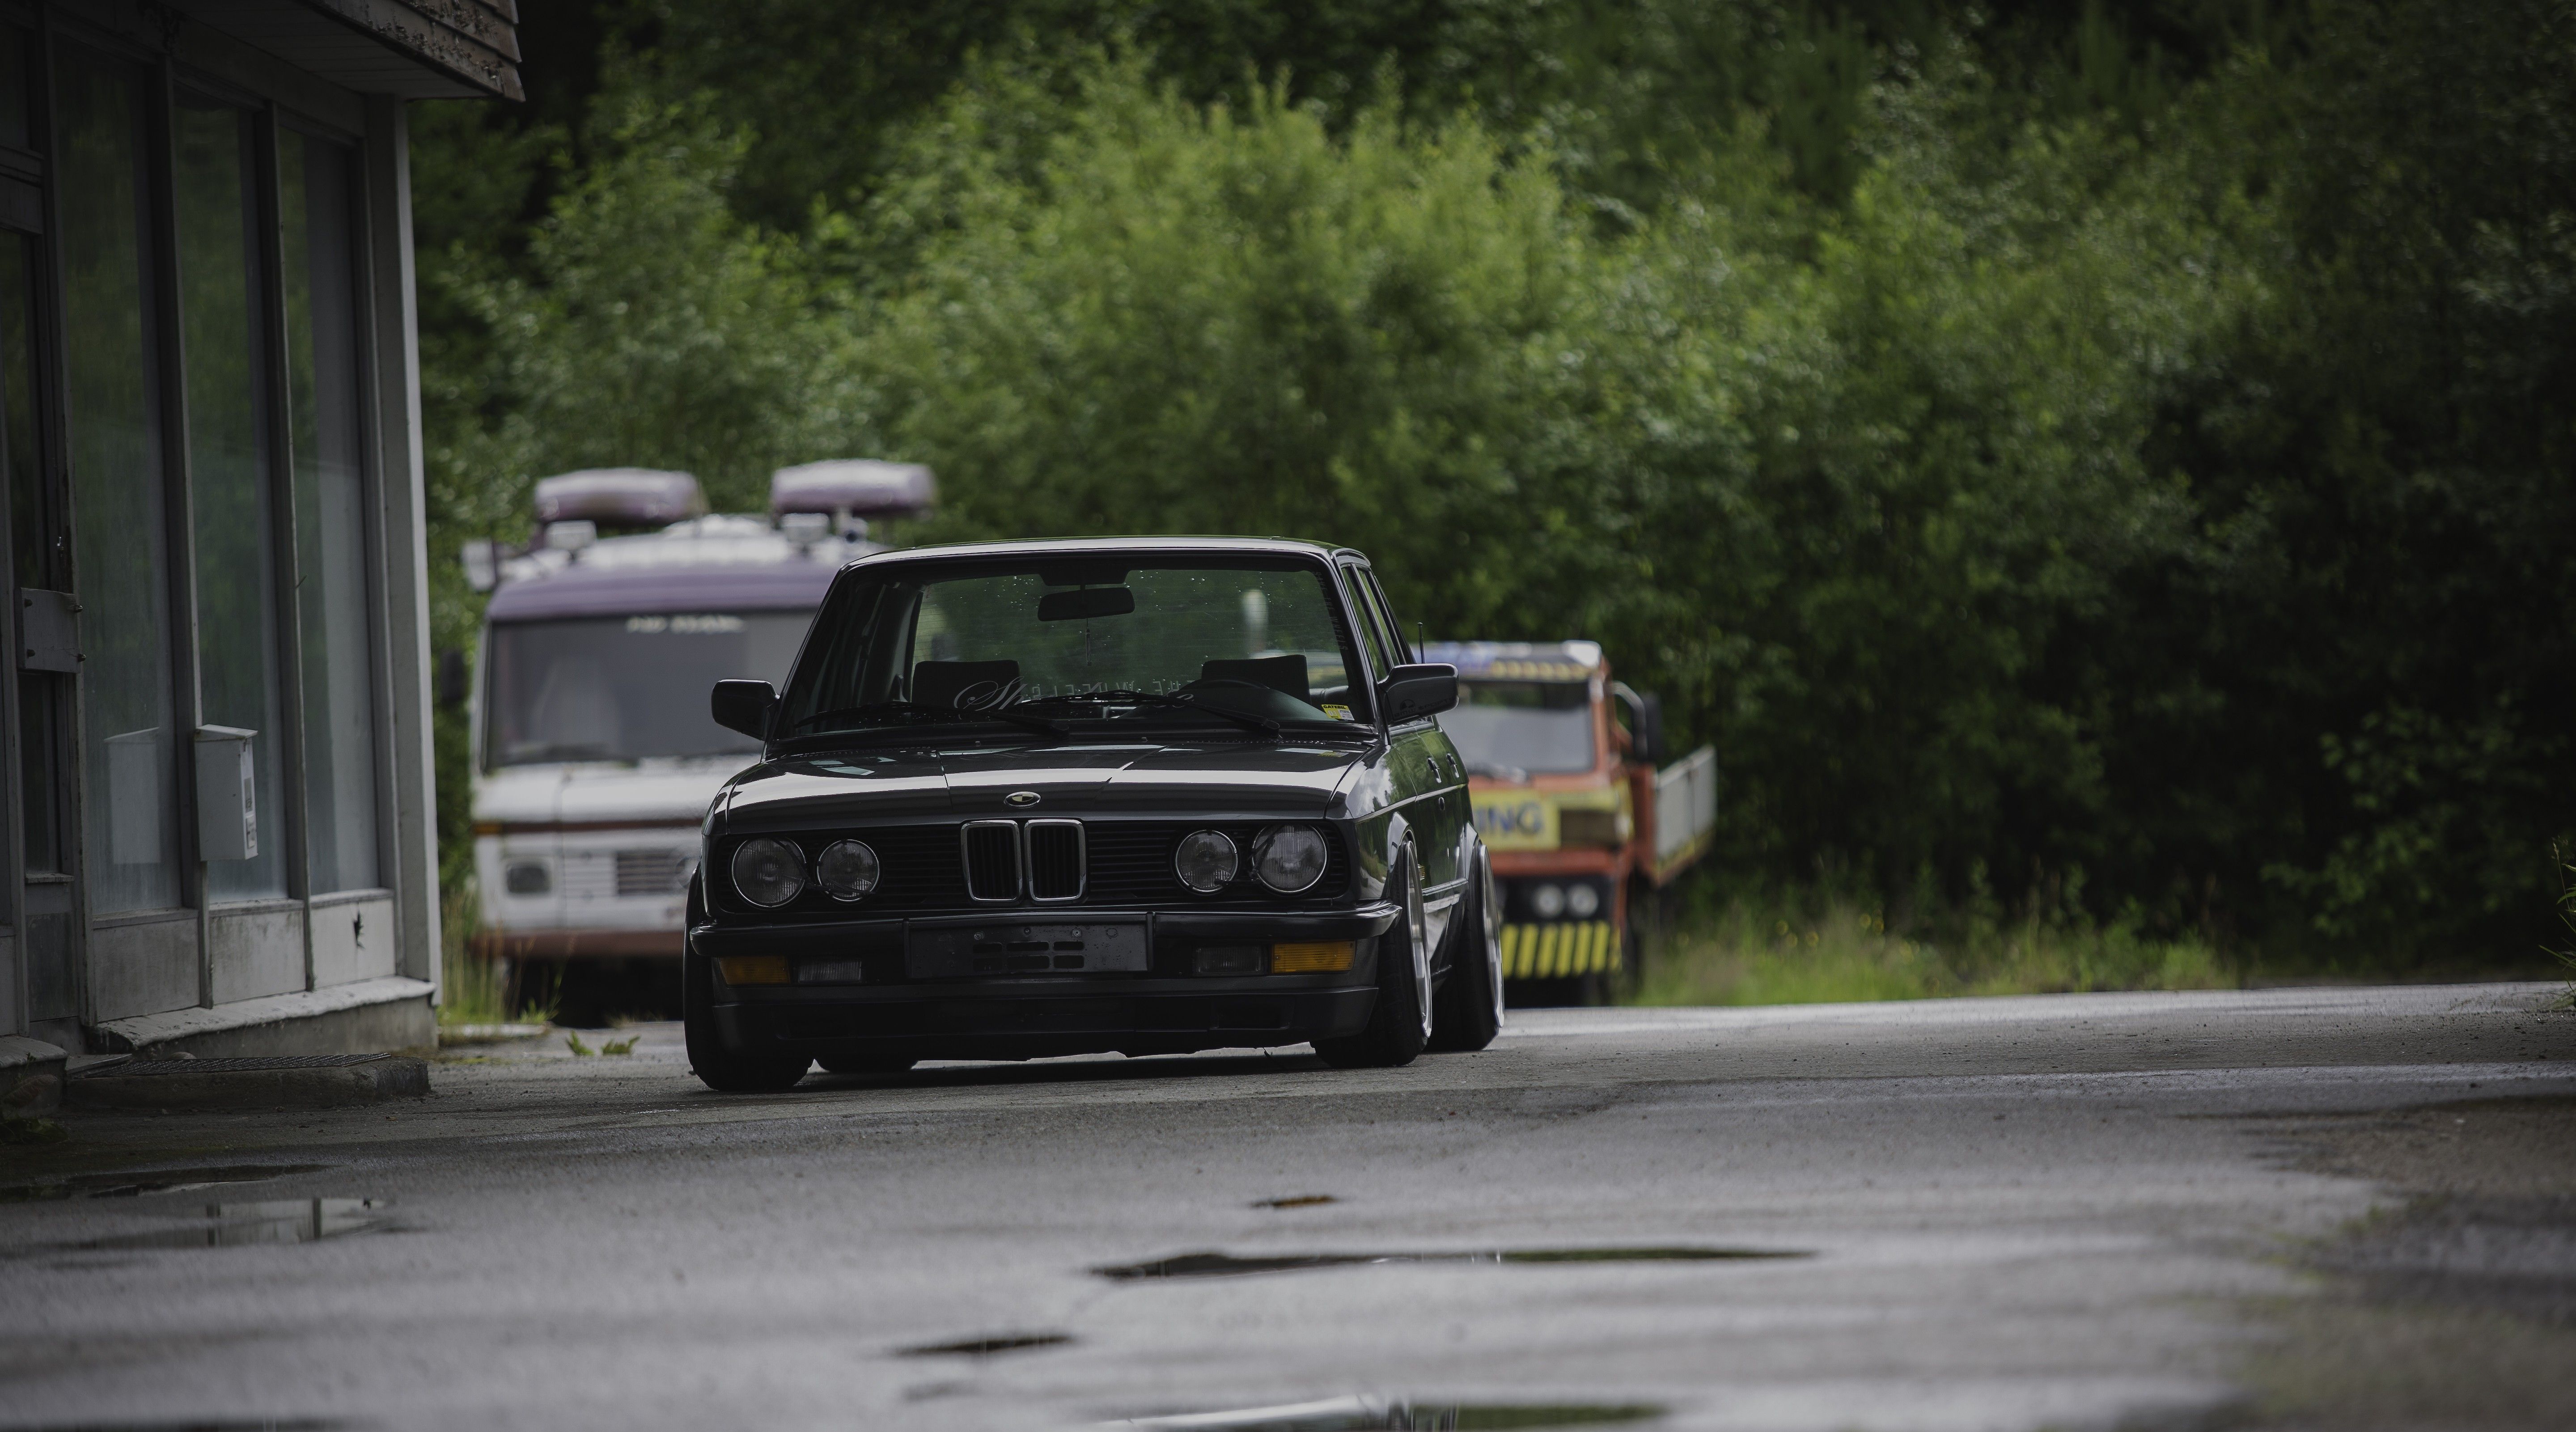 BMW E Stance, Stanceworks, Low, Norway, Summer, Rain Wallpaper